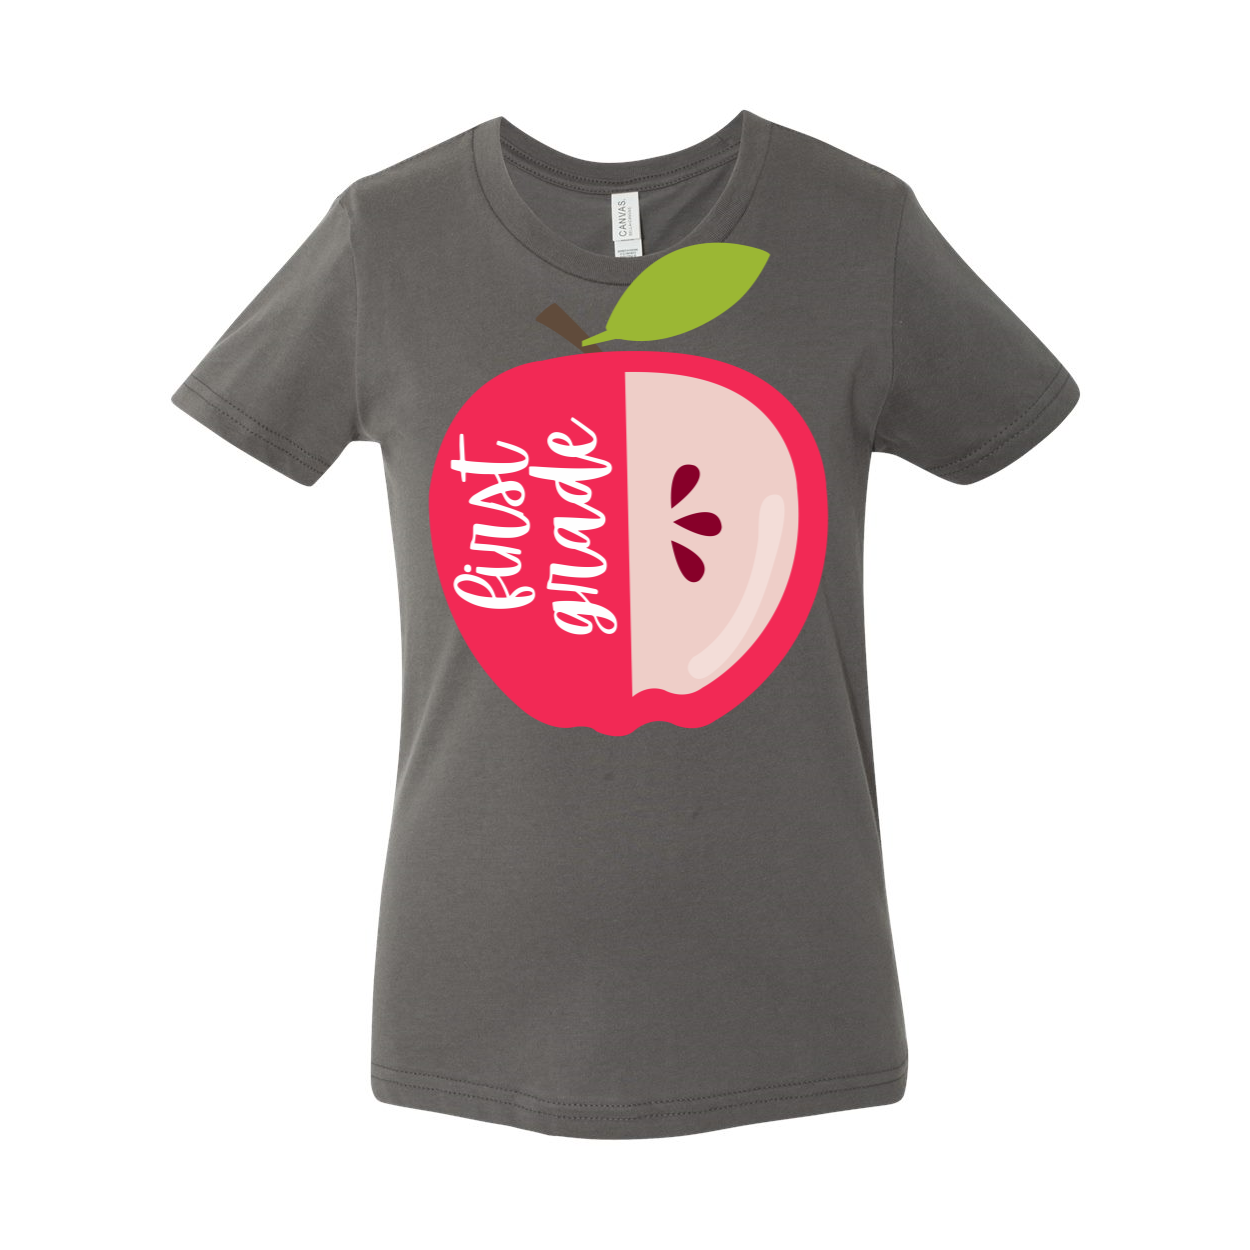 First Grade YOUTH Apple Shirt